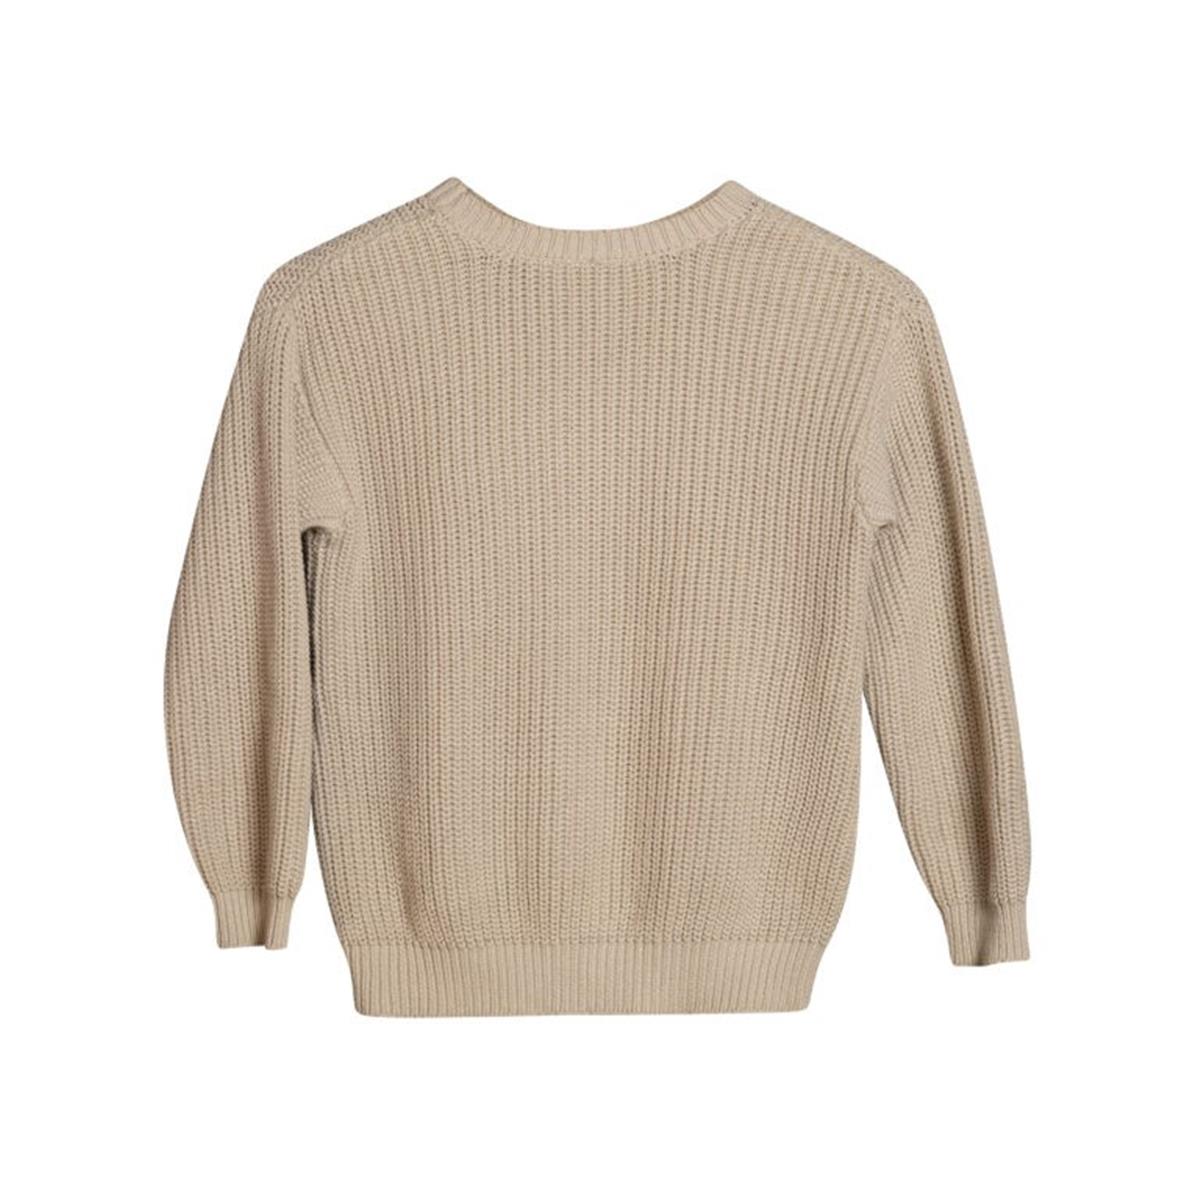 I Dig Denim - BRETT knitted sweater cold beige